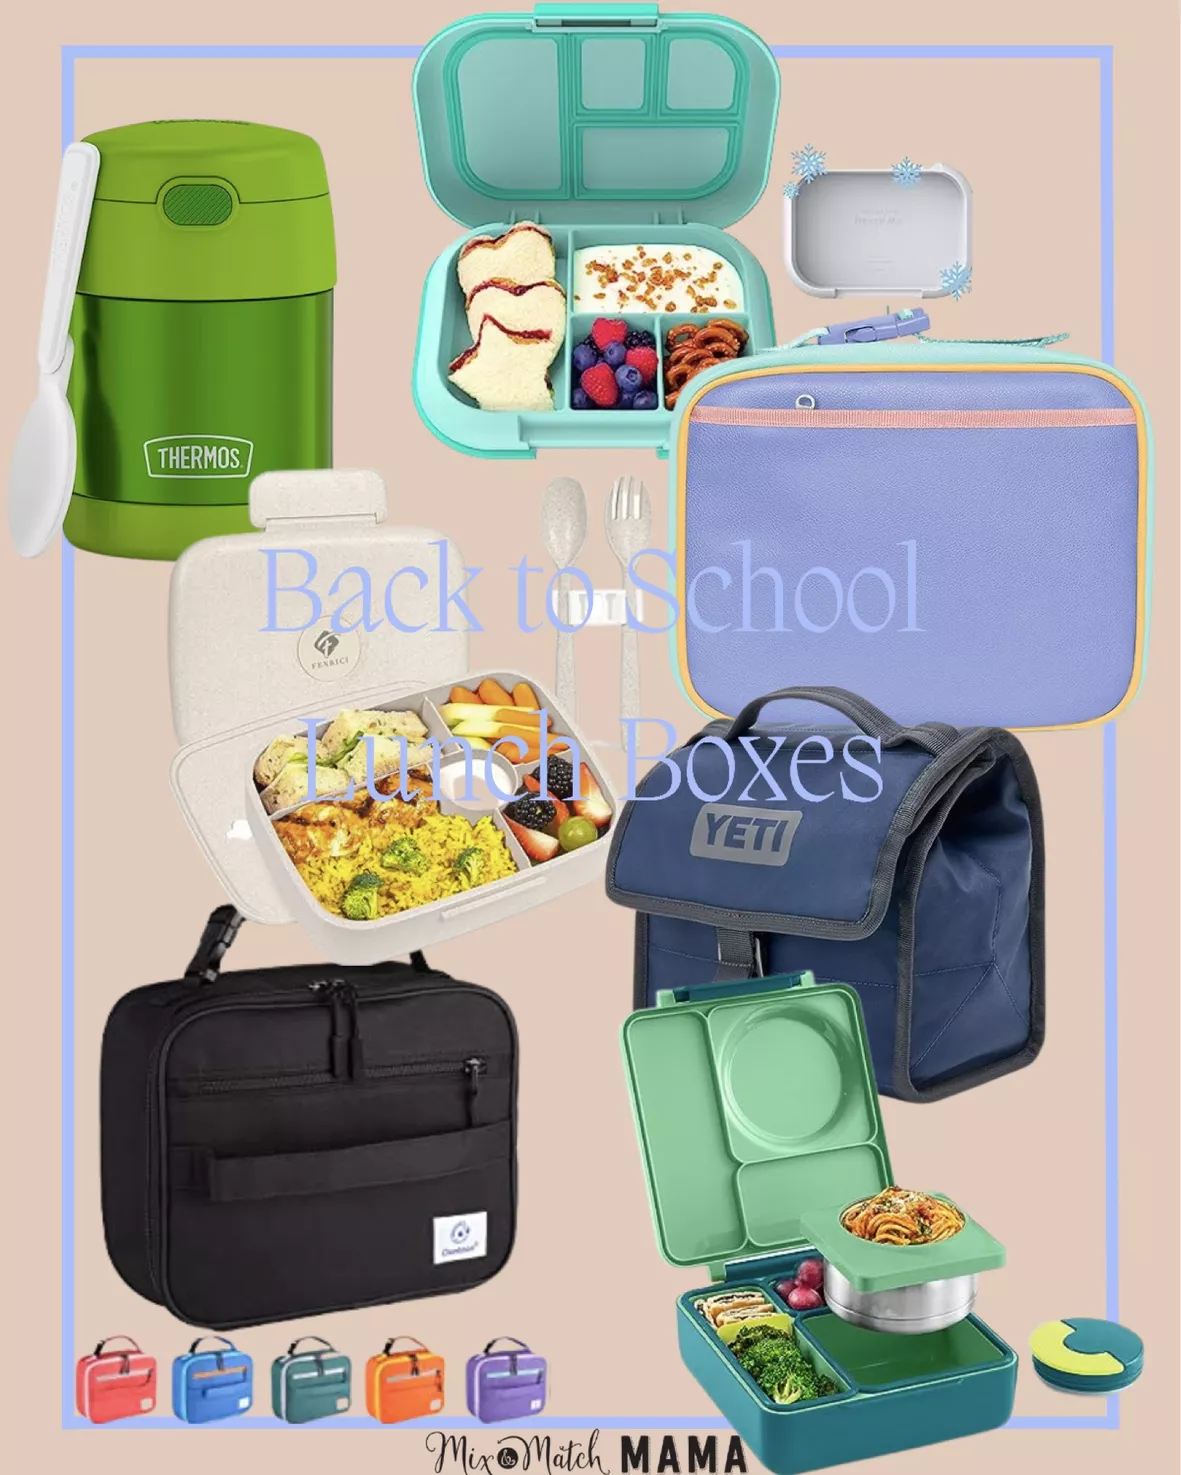  Genteen Premium Kids Lunch Box - Kids Chill Bento Box